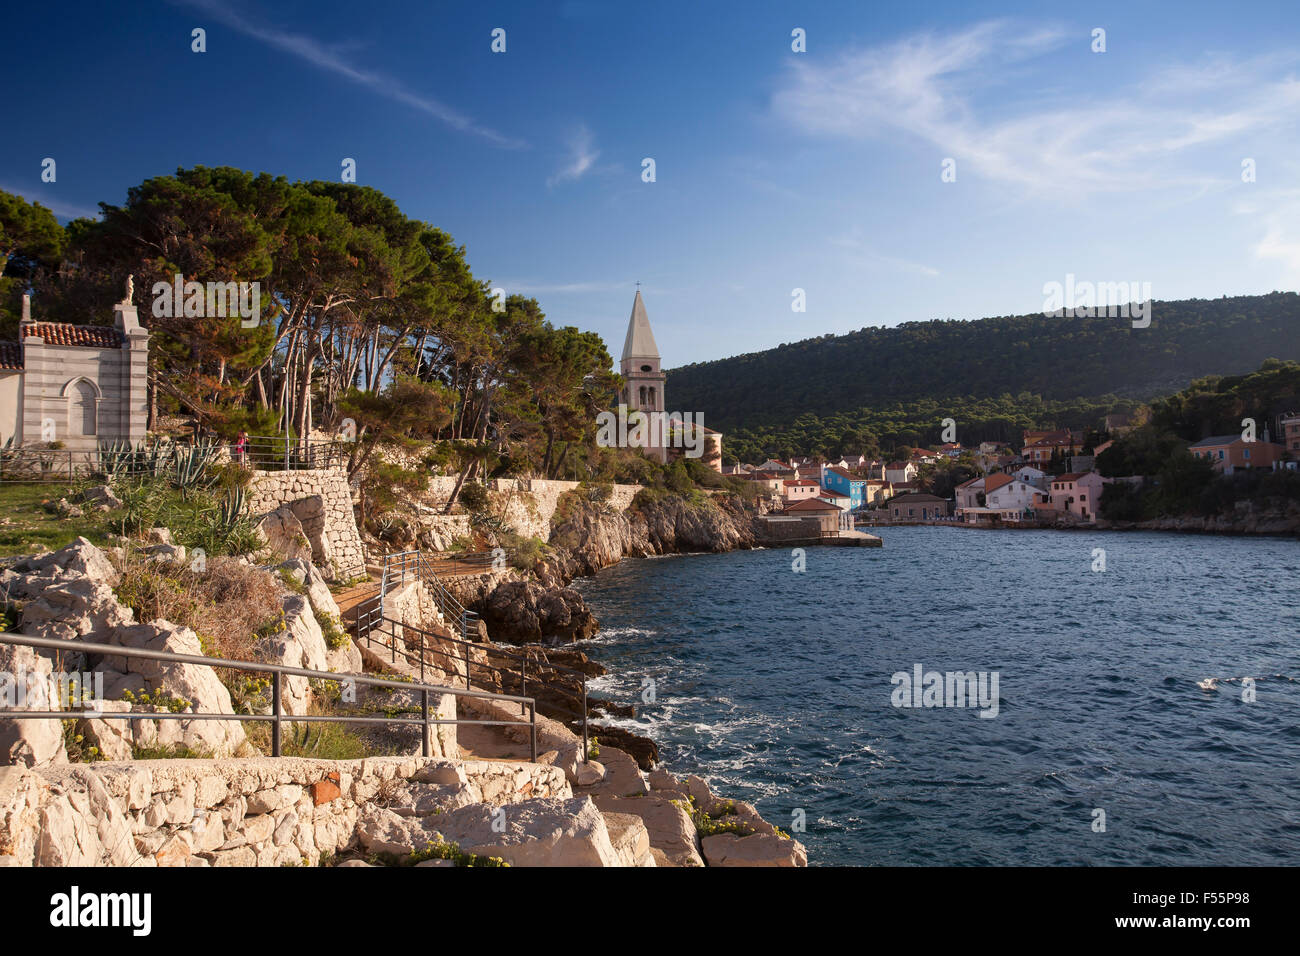 View of Veli Losing harbour, with Saint Basil's Church, Cres island, Kvarner Gulf, Adriatic Sea, Croatia Stock Photo